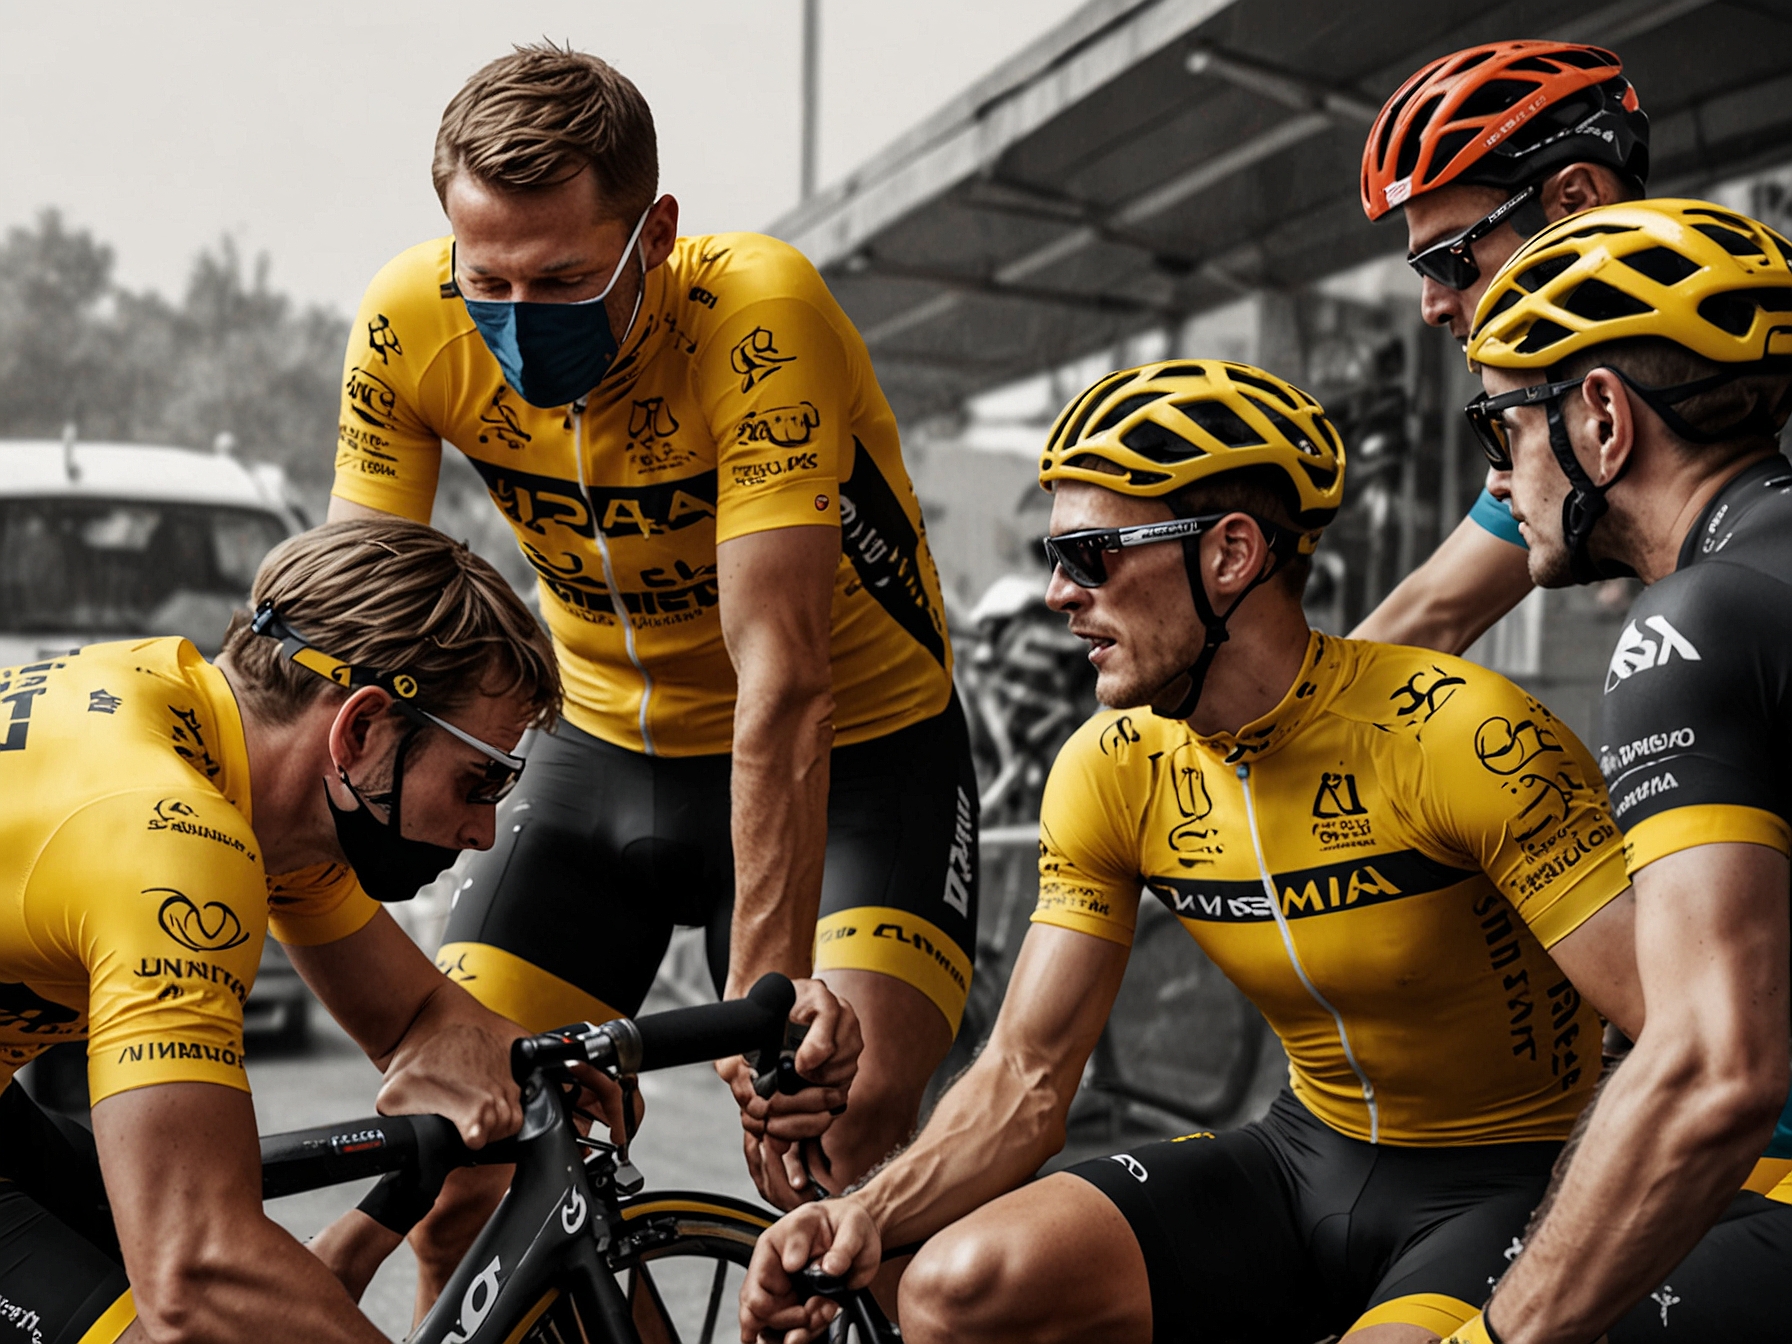 Team Jumbo-Visma, including Jonas Vingegaard, strategizing during a break on stage 2 of the Tour de France, exhibiting focused teamwork and preparedness.